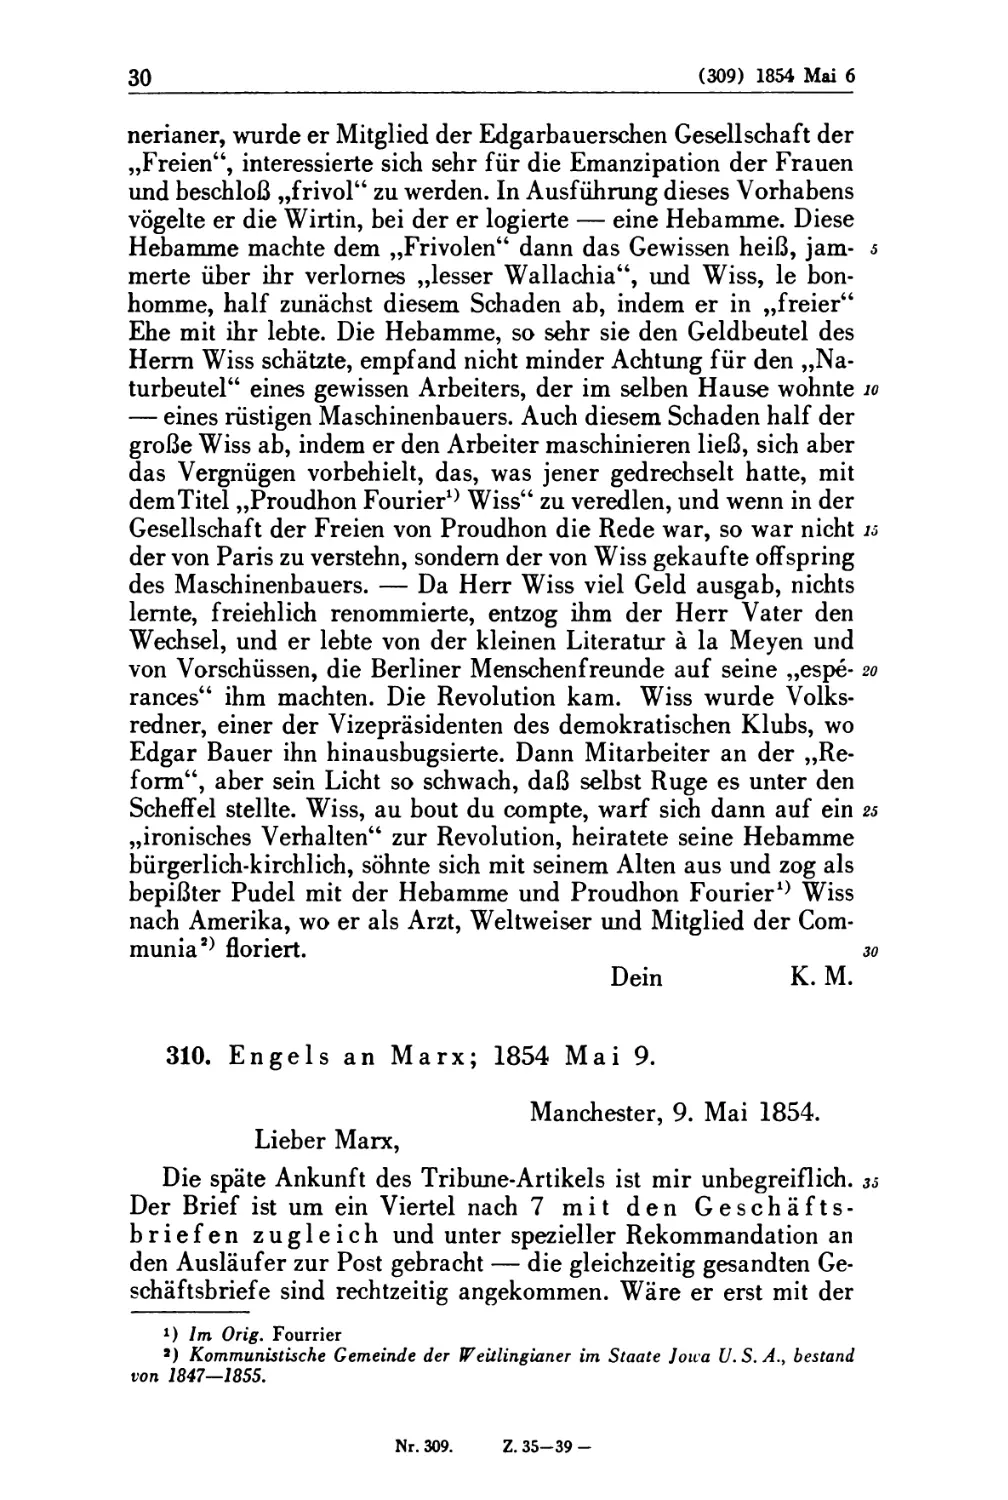 310. Engels an Marx; 1854 Mai 9